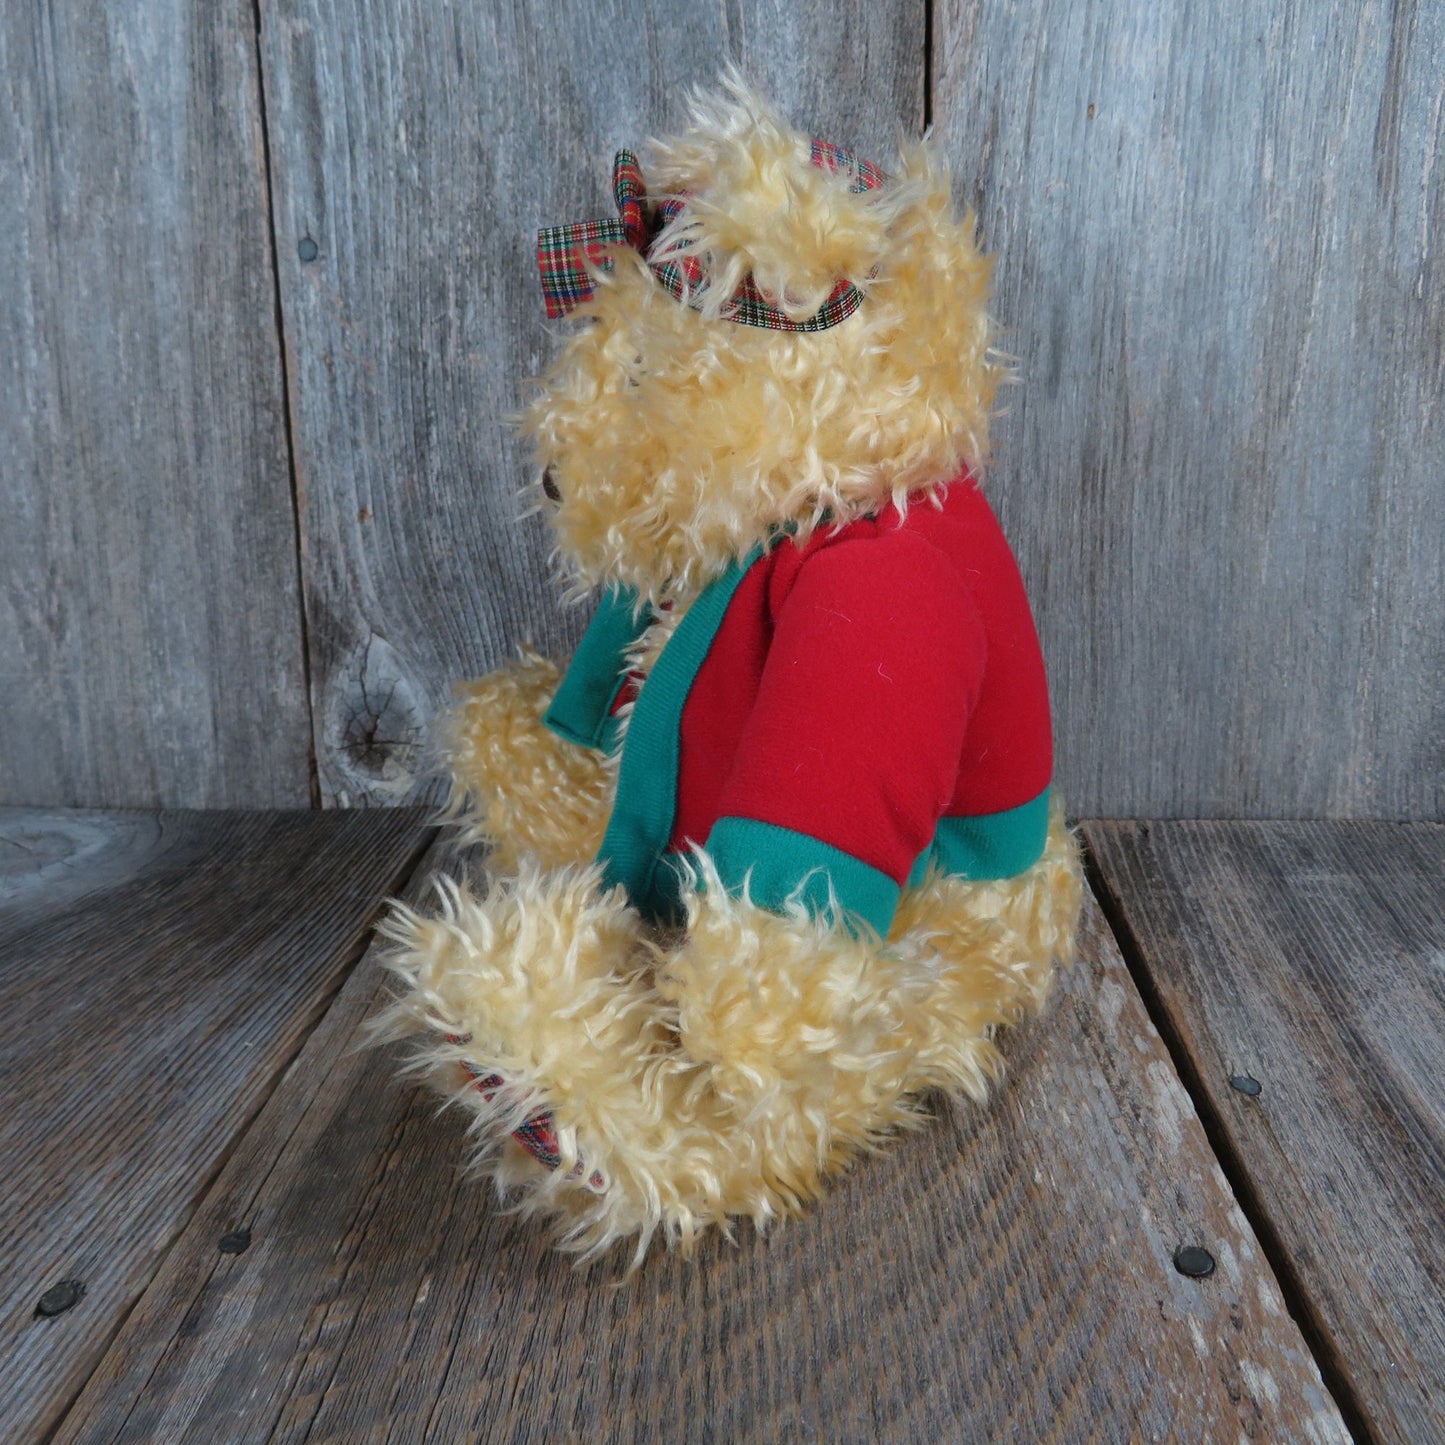 Vintage Teddy Bear Plush Red Sweater Hallmark Plaid Bow Curly Hair Stuffed Animal Christmas Holiday